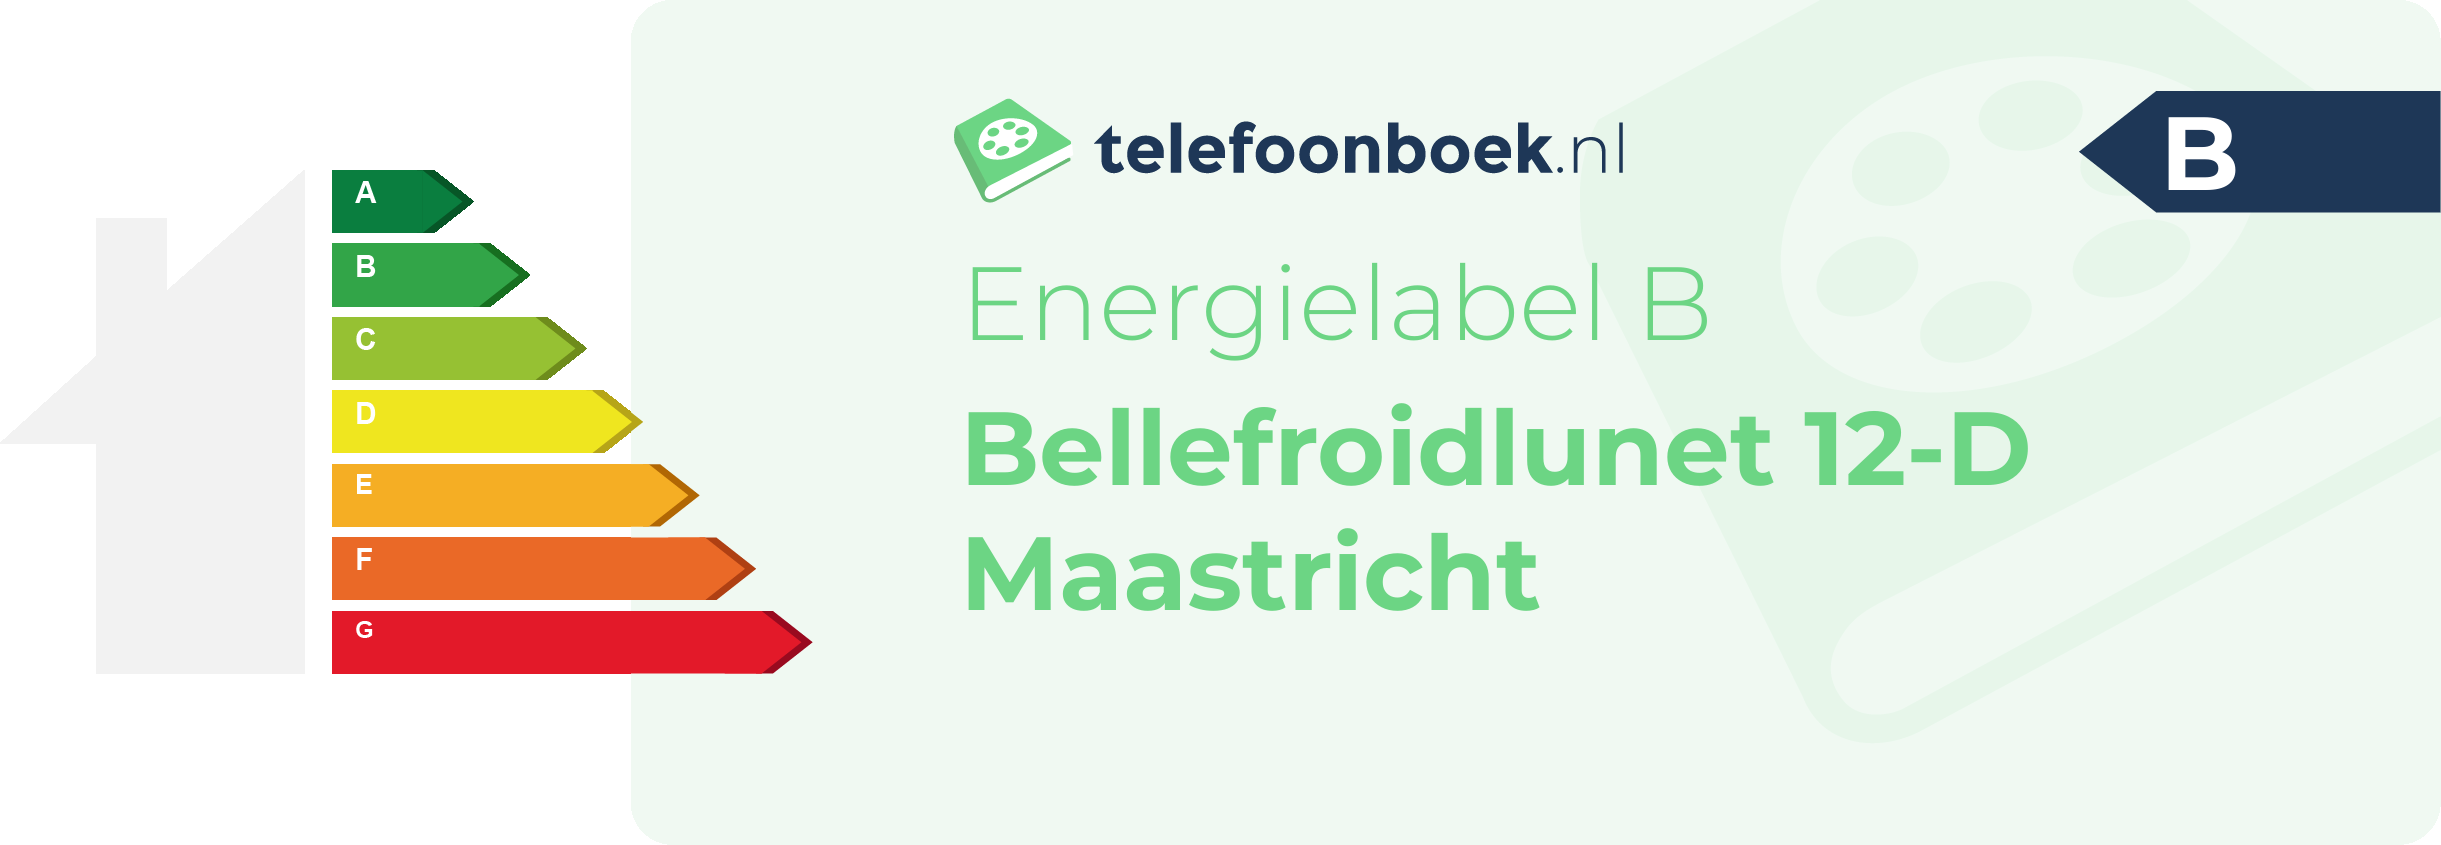 Energielabel Bellefroidlunet 12-D Maastricht